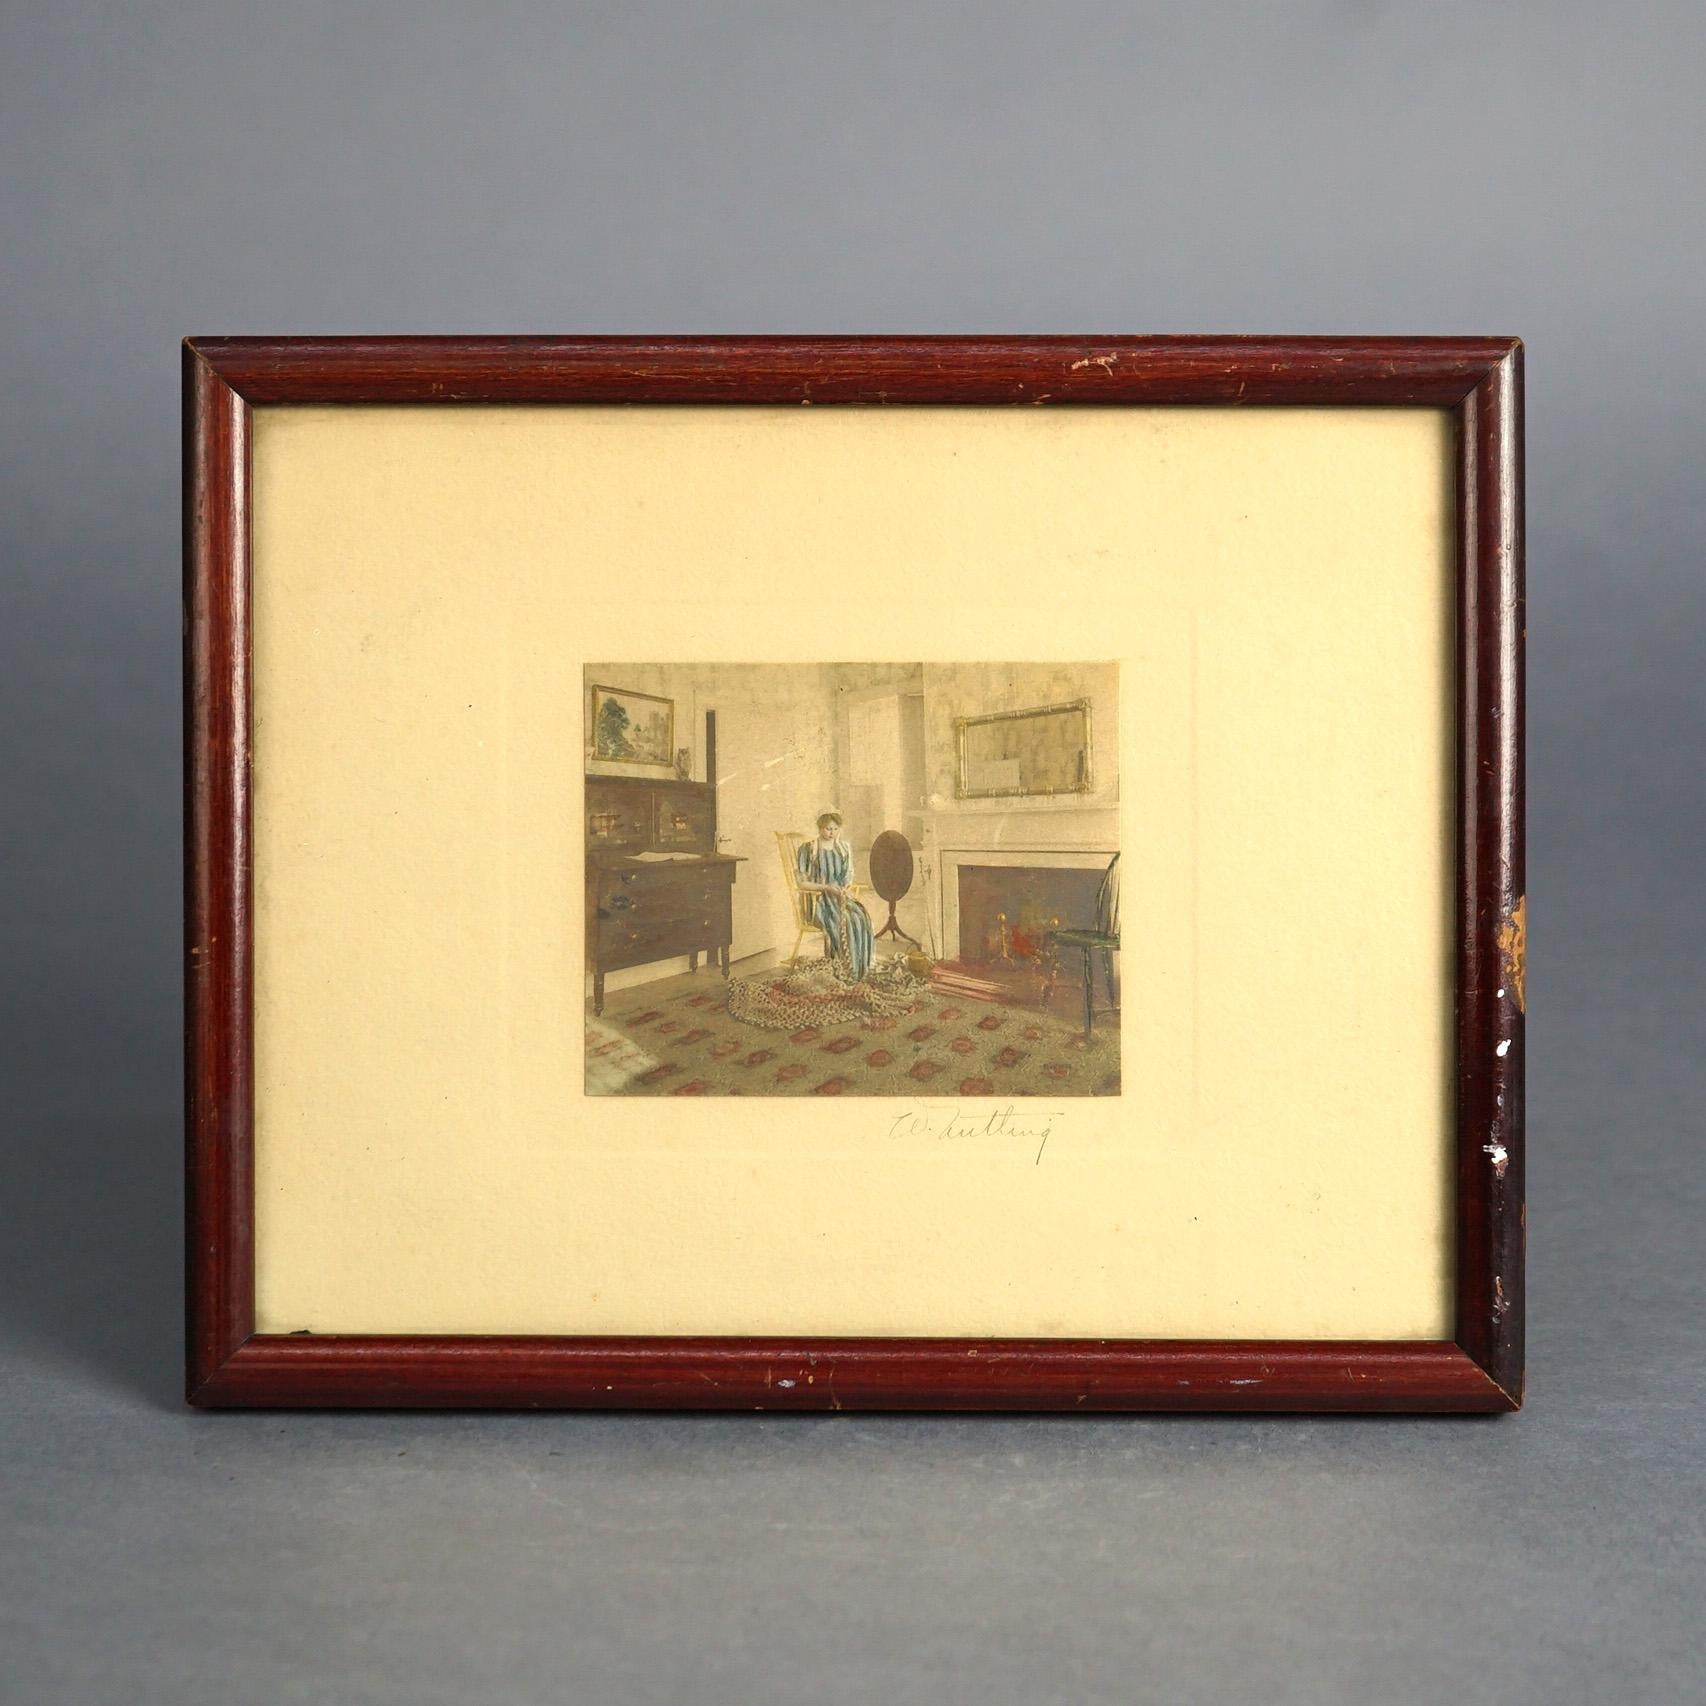 Three Antique Wallace Nutting Interior Prints, Framed, C1920

Measures- 1) Blue Skirt: 7.75''H x 9.75''W x .75''D; 2) Redish Skirt: 7.75''H x 9.75''W x .75''D; 3) Hat Box: 13.75''H x 10''W x 1''D